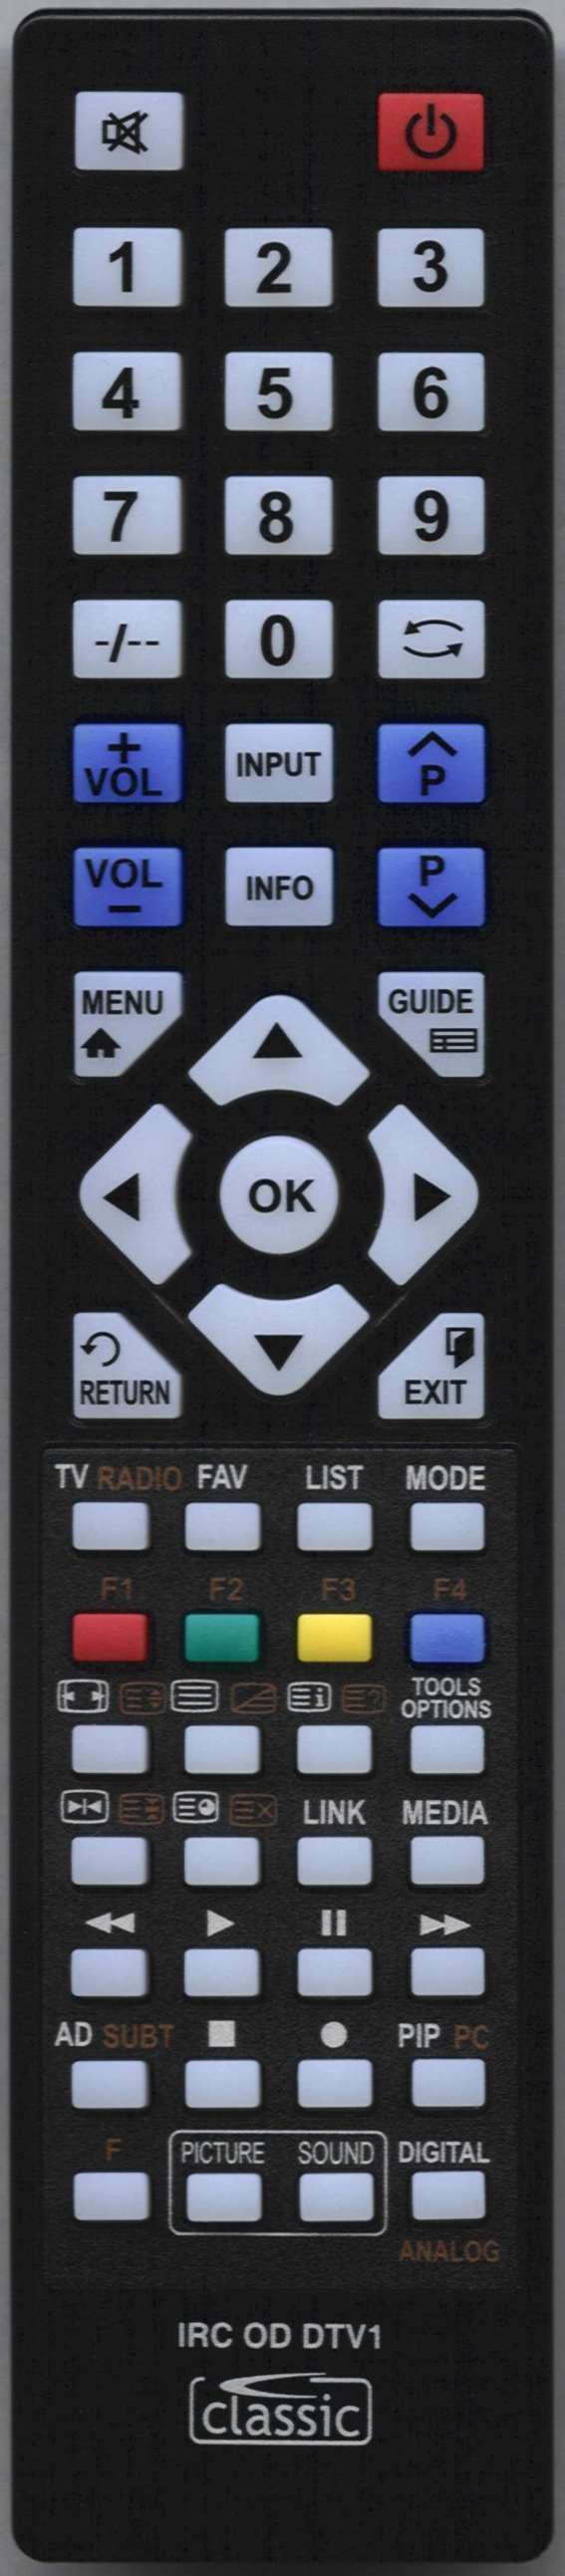 Sony KDL-40R453C Remote Control Alternative